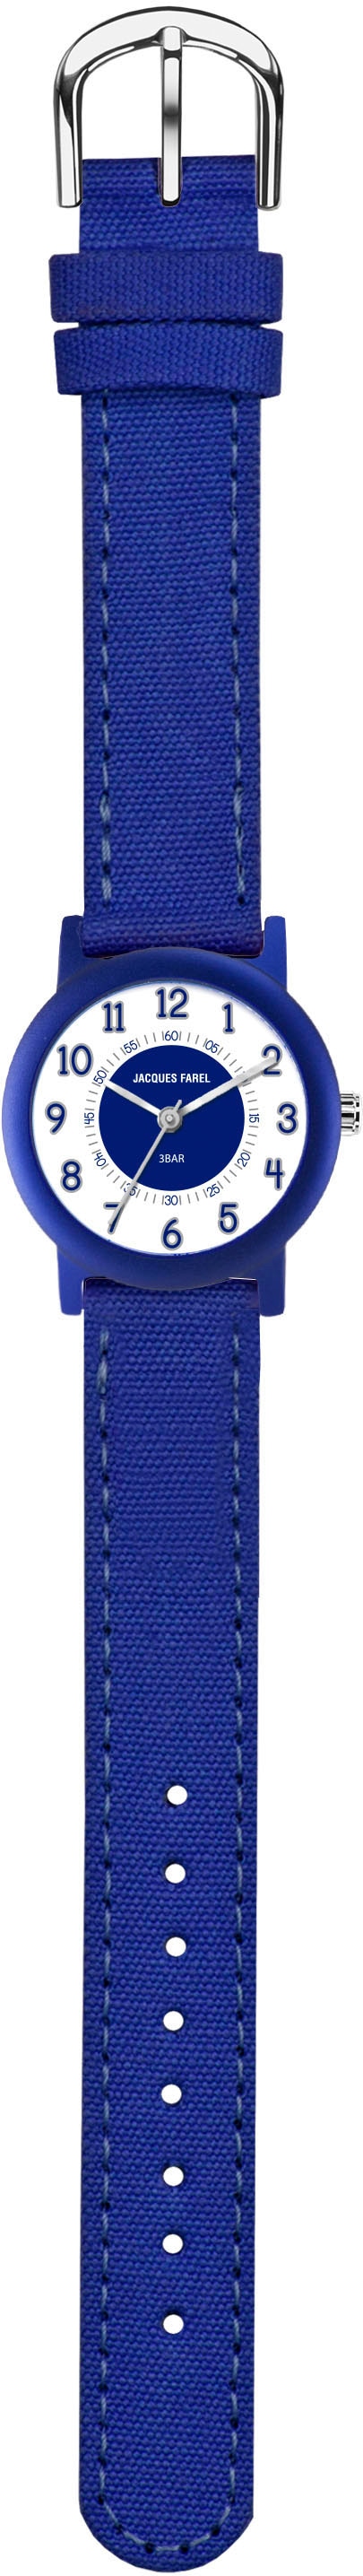 Jacques Farel Quarzuhr »ORG 800«, Armbanduhr, Kinderuhr, ideal auch als Geschenk